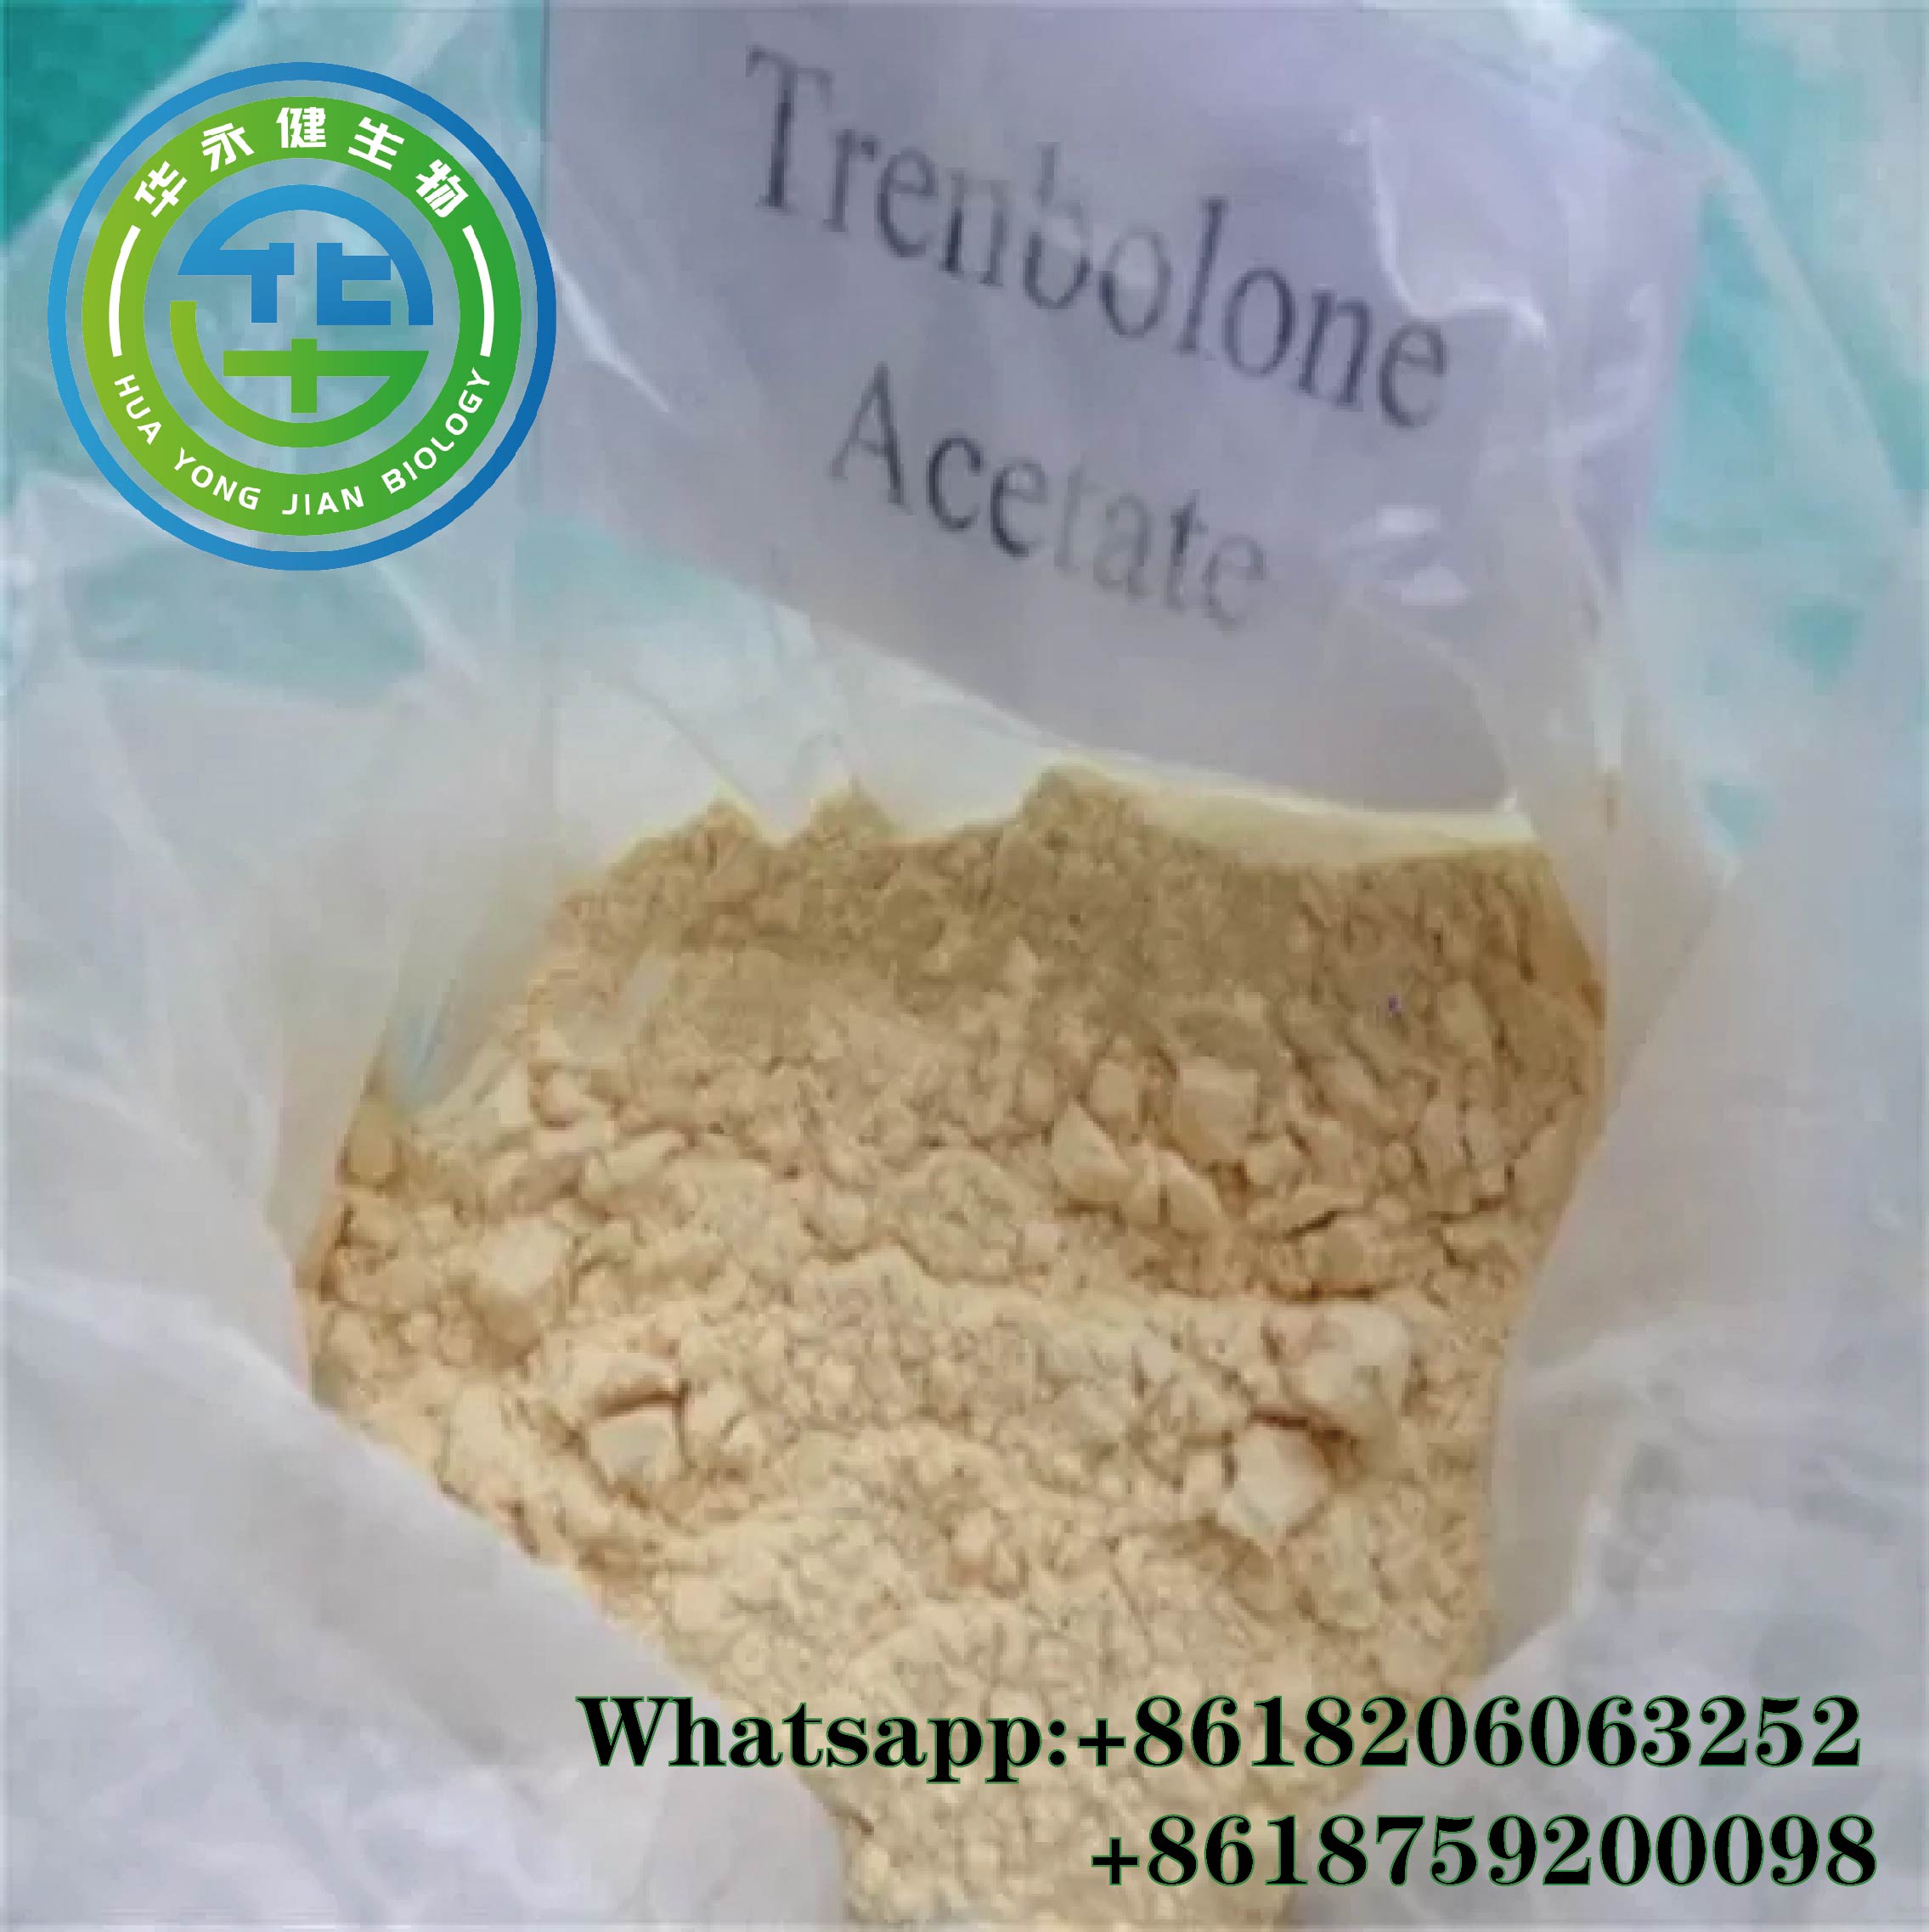 Trenb Yellow Trenbolone Acetate Raw Steroids Powder 100% Customs Pass